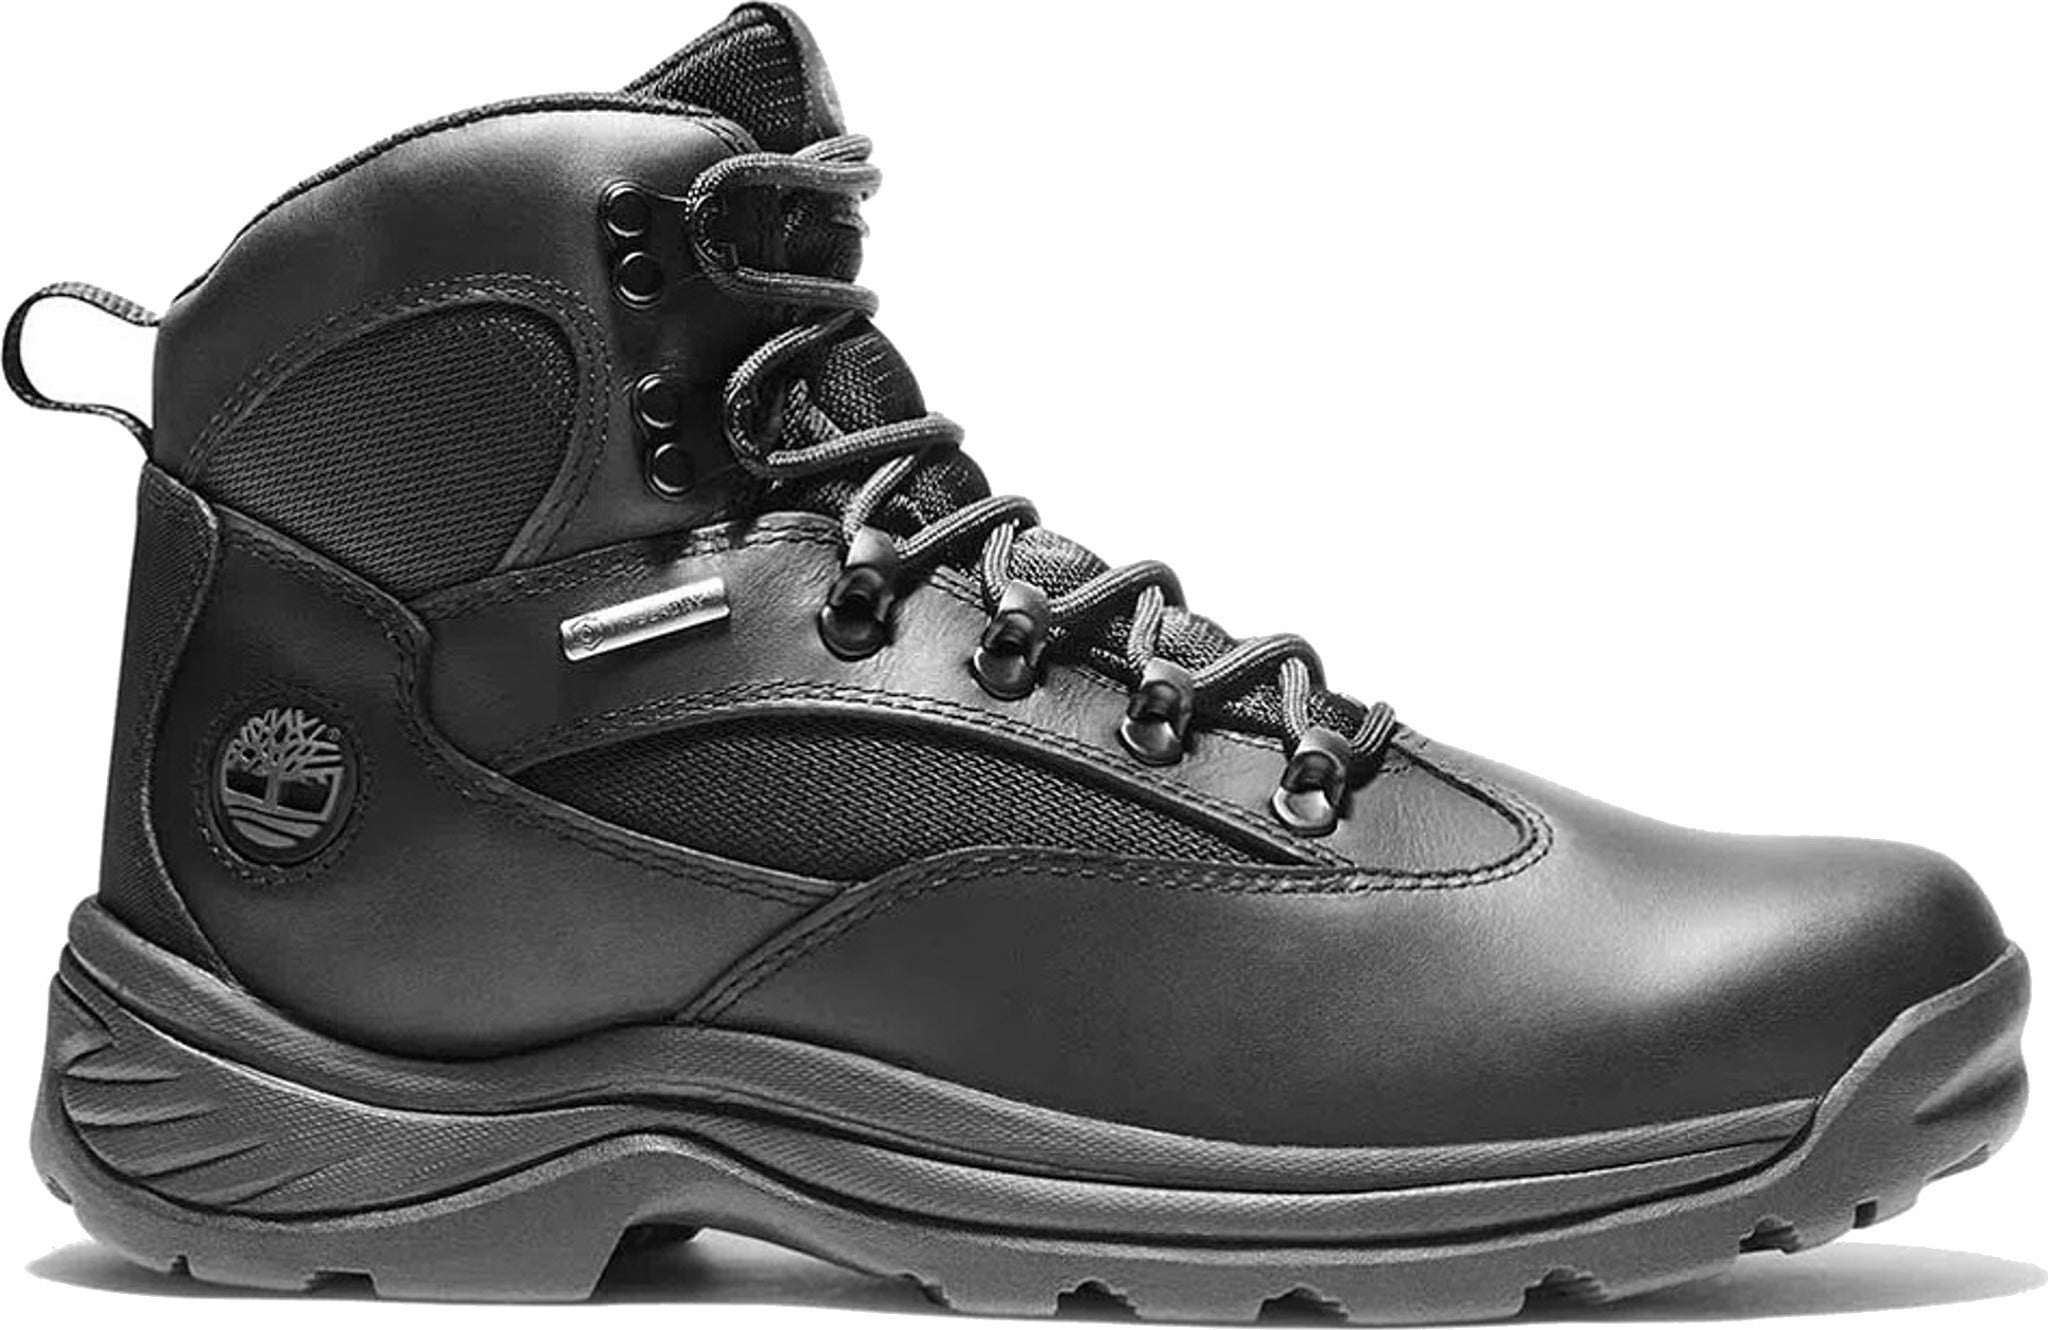 Timberland Chocorua Trail Mid Waterproof Hiker Boots - Men's | Altitude ...